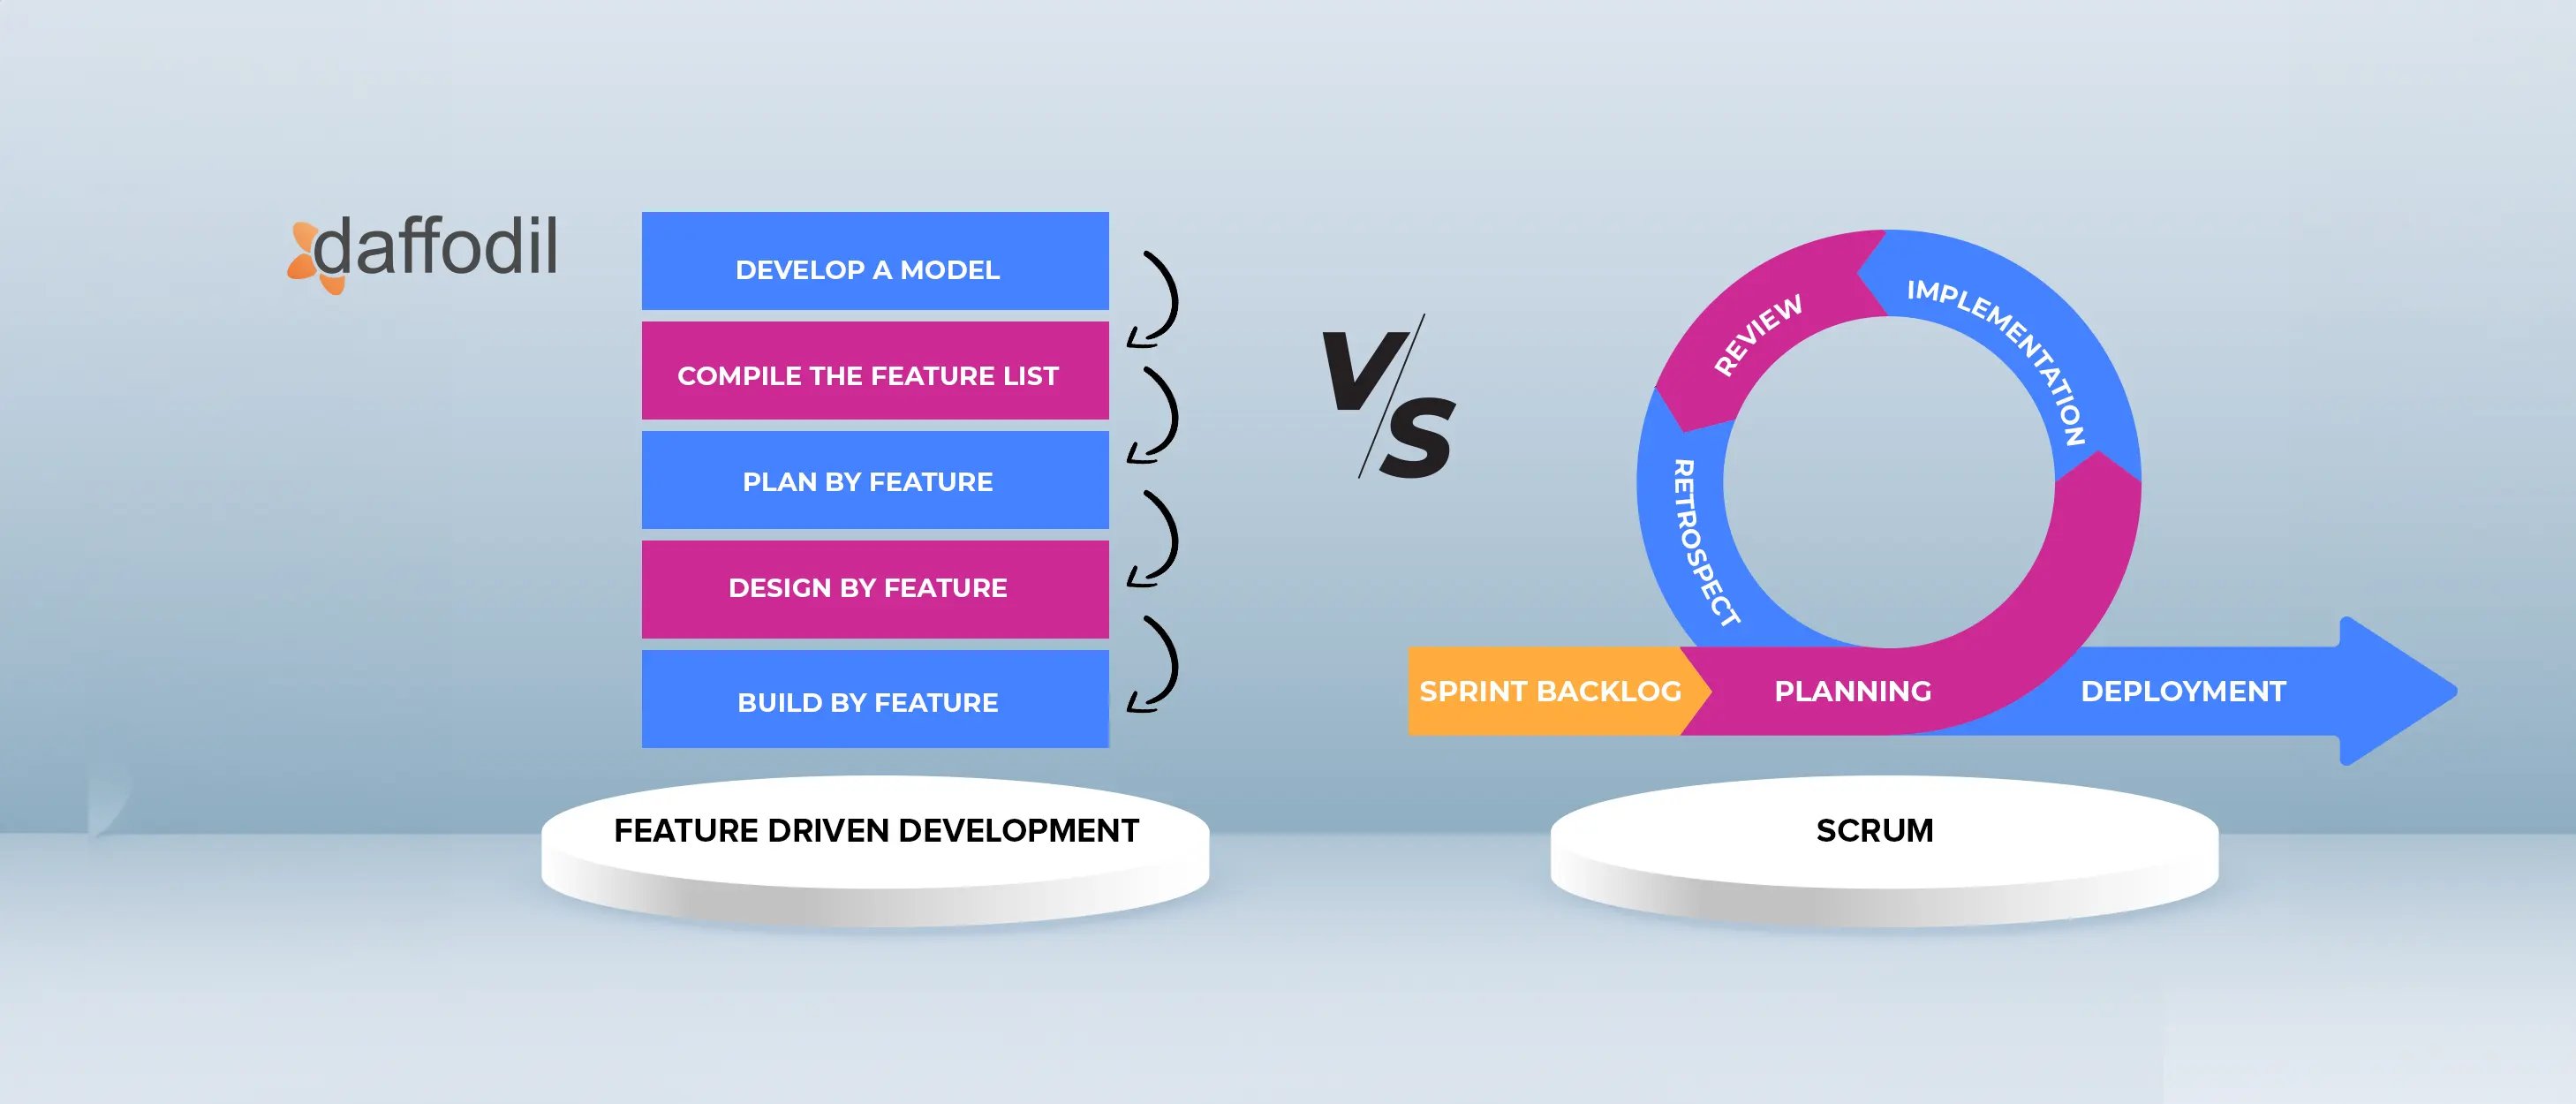 Feature-Based Development vs. Scrum Sprints